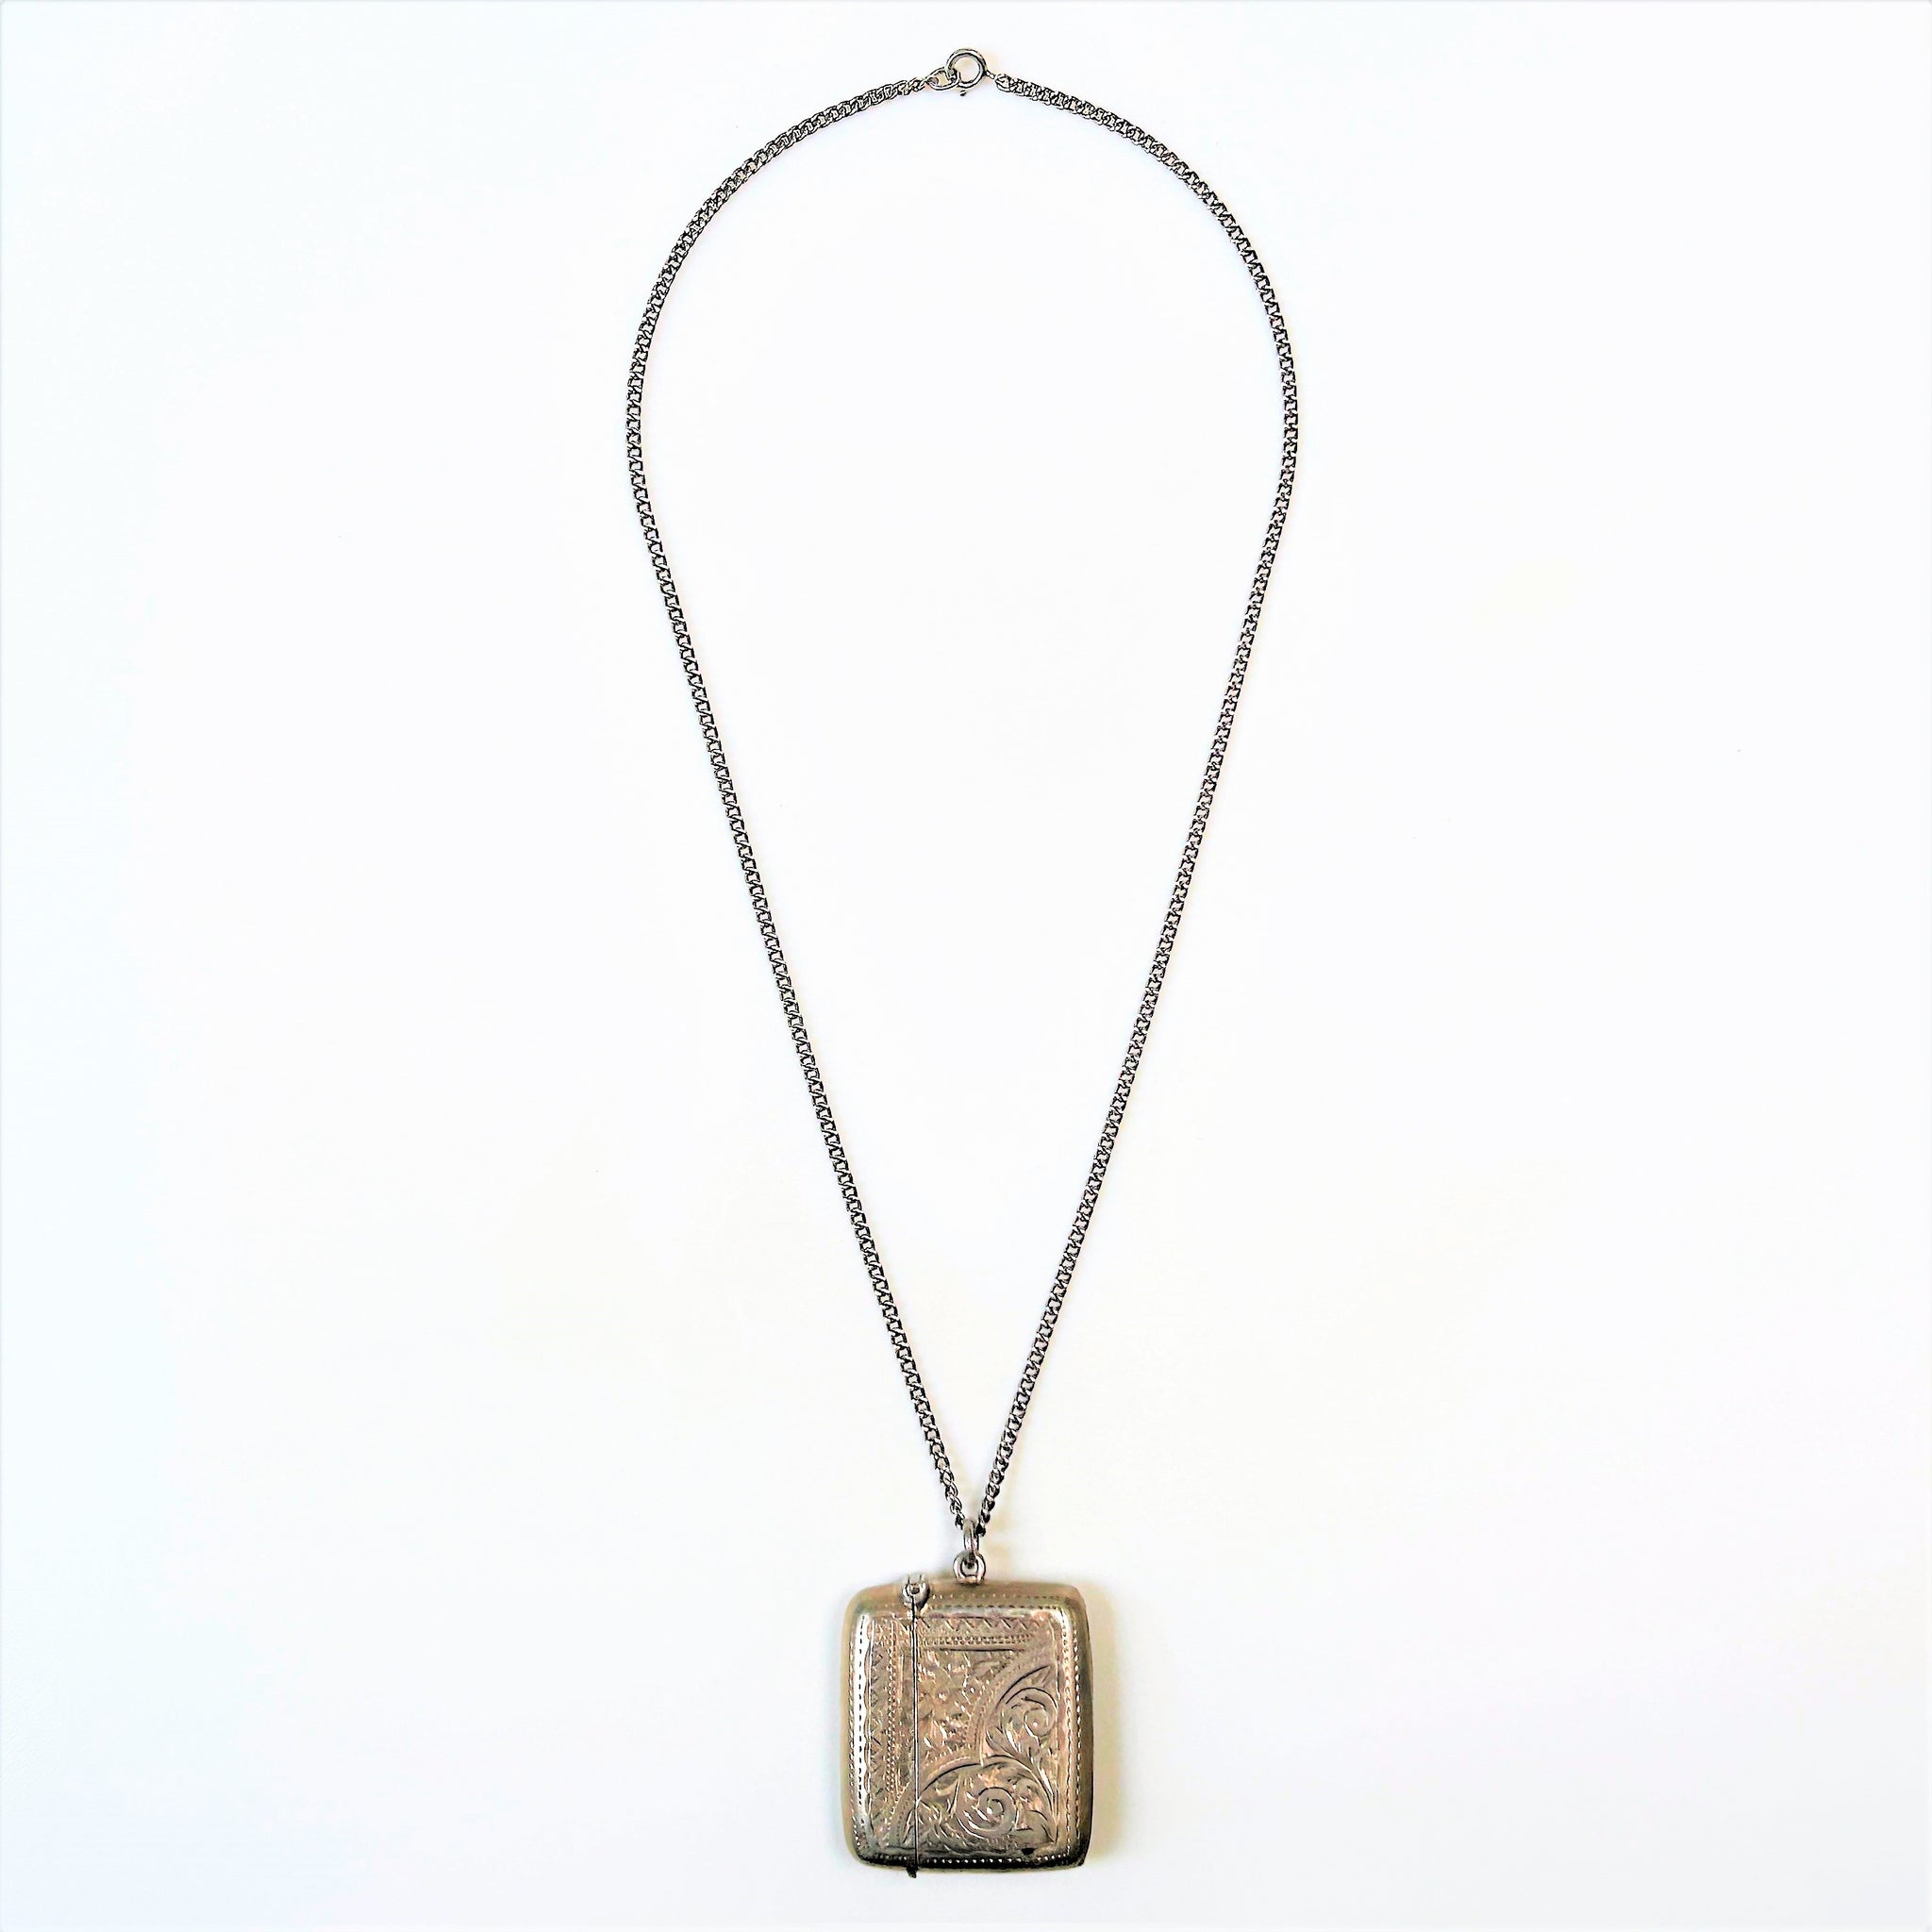 Antique Sterling Silver Vesta Case on Chain Necklace